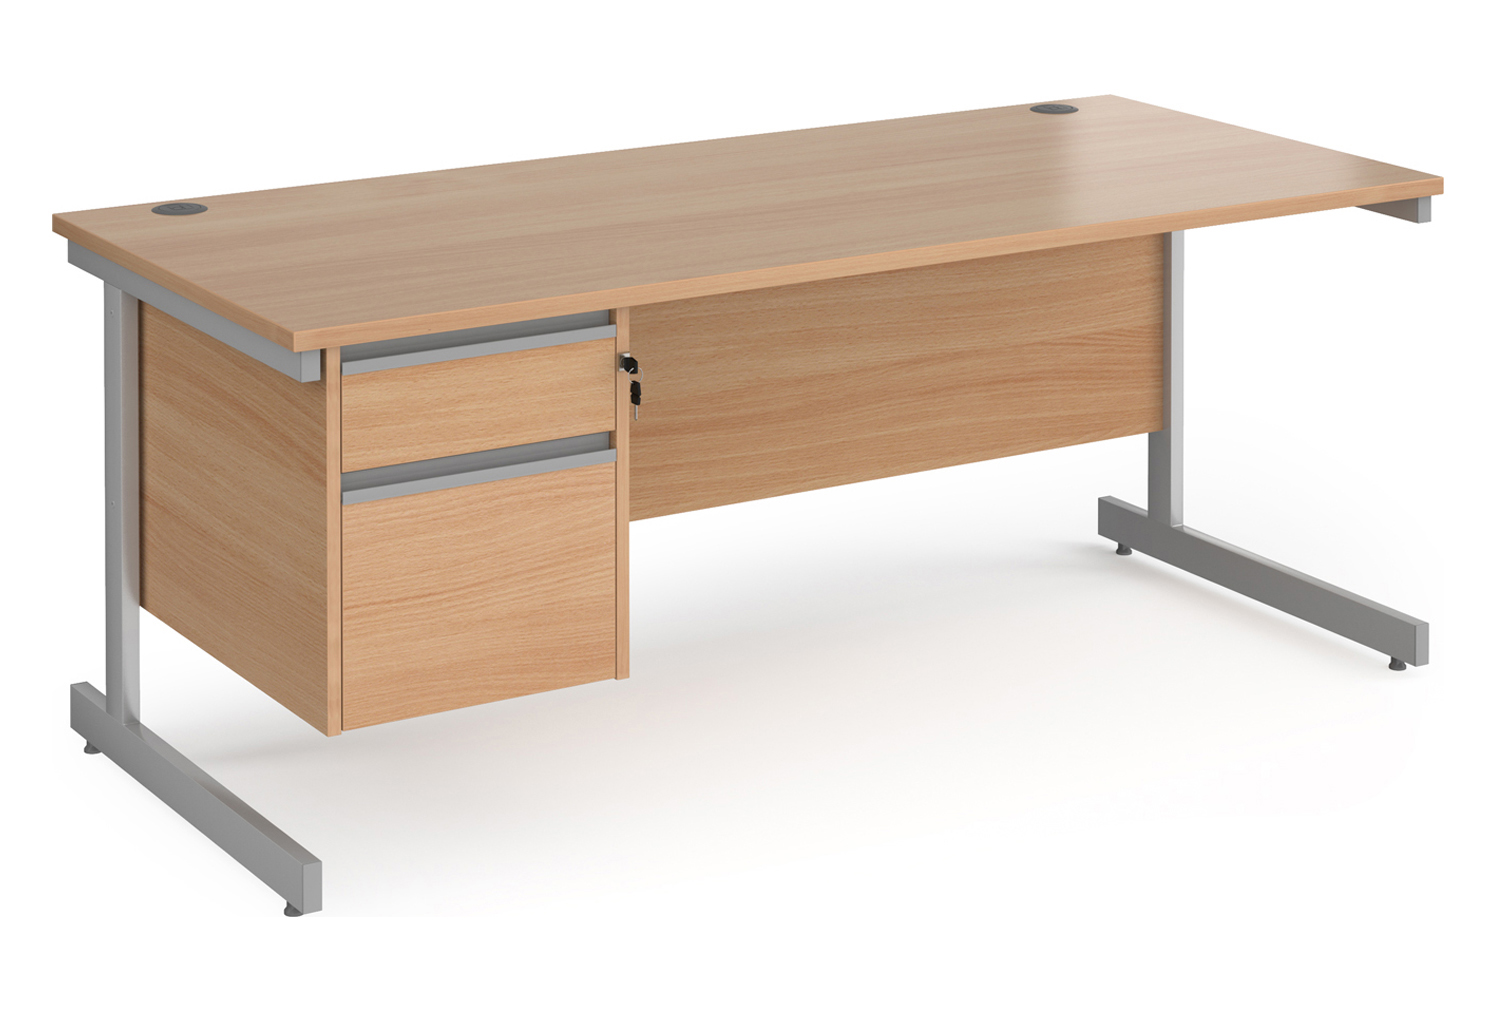 Value Line Classic+ Rectangular C-Leg Office Desk 2 Drawers (Silver Leg), 180wx80dx73h (cm), Beech, Fully Installed